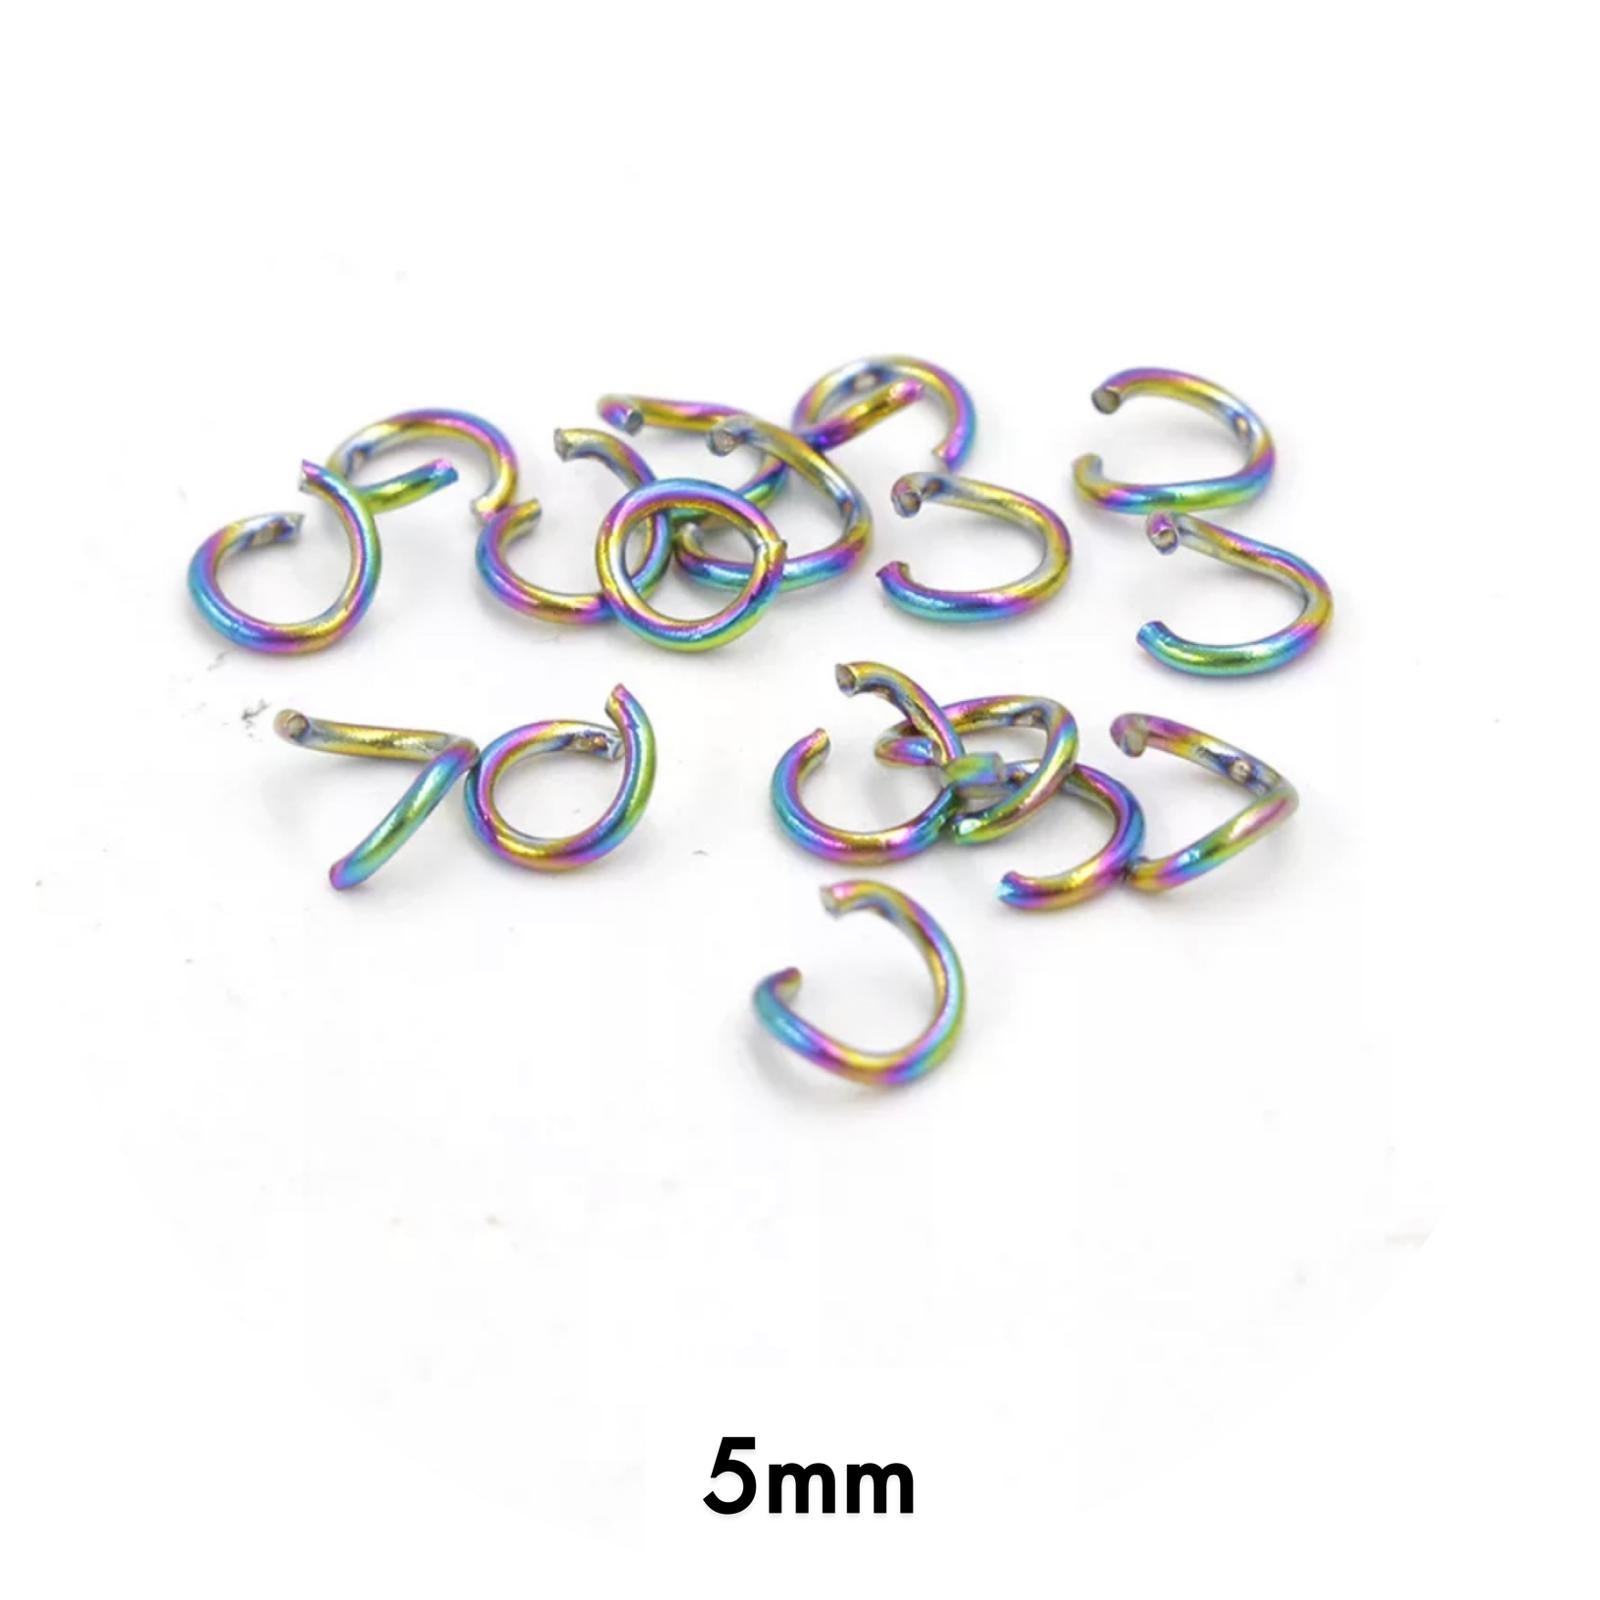 5mm Jump Rings - Rainbow Stainless Steel - 40 pcs